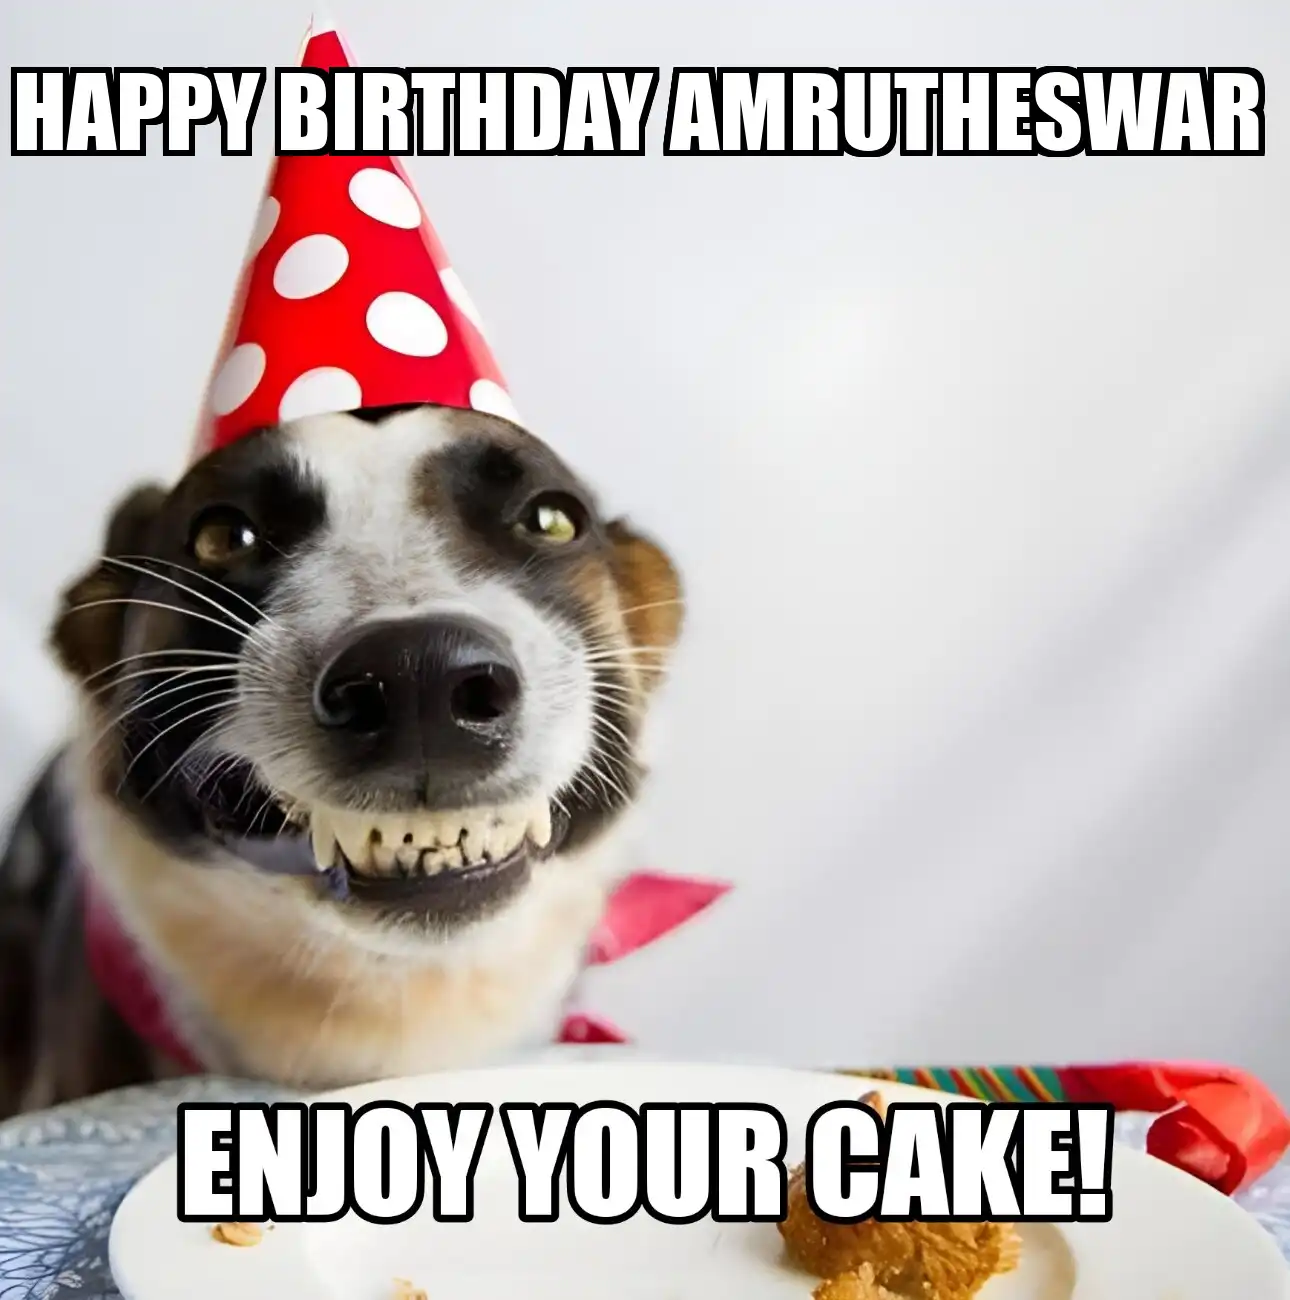 Happy Birthday Amrutheswar Enjoy Your Cake Dog Meme